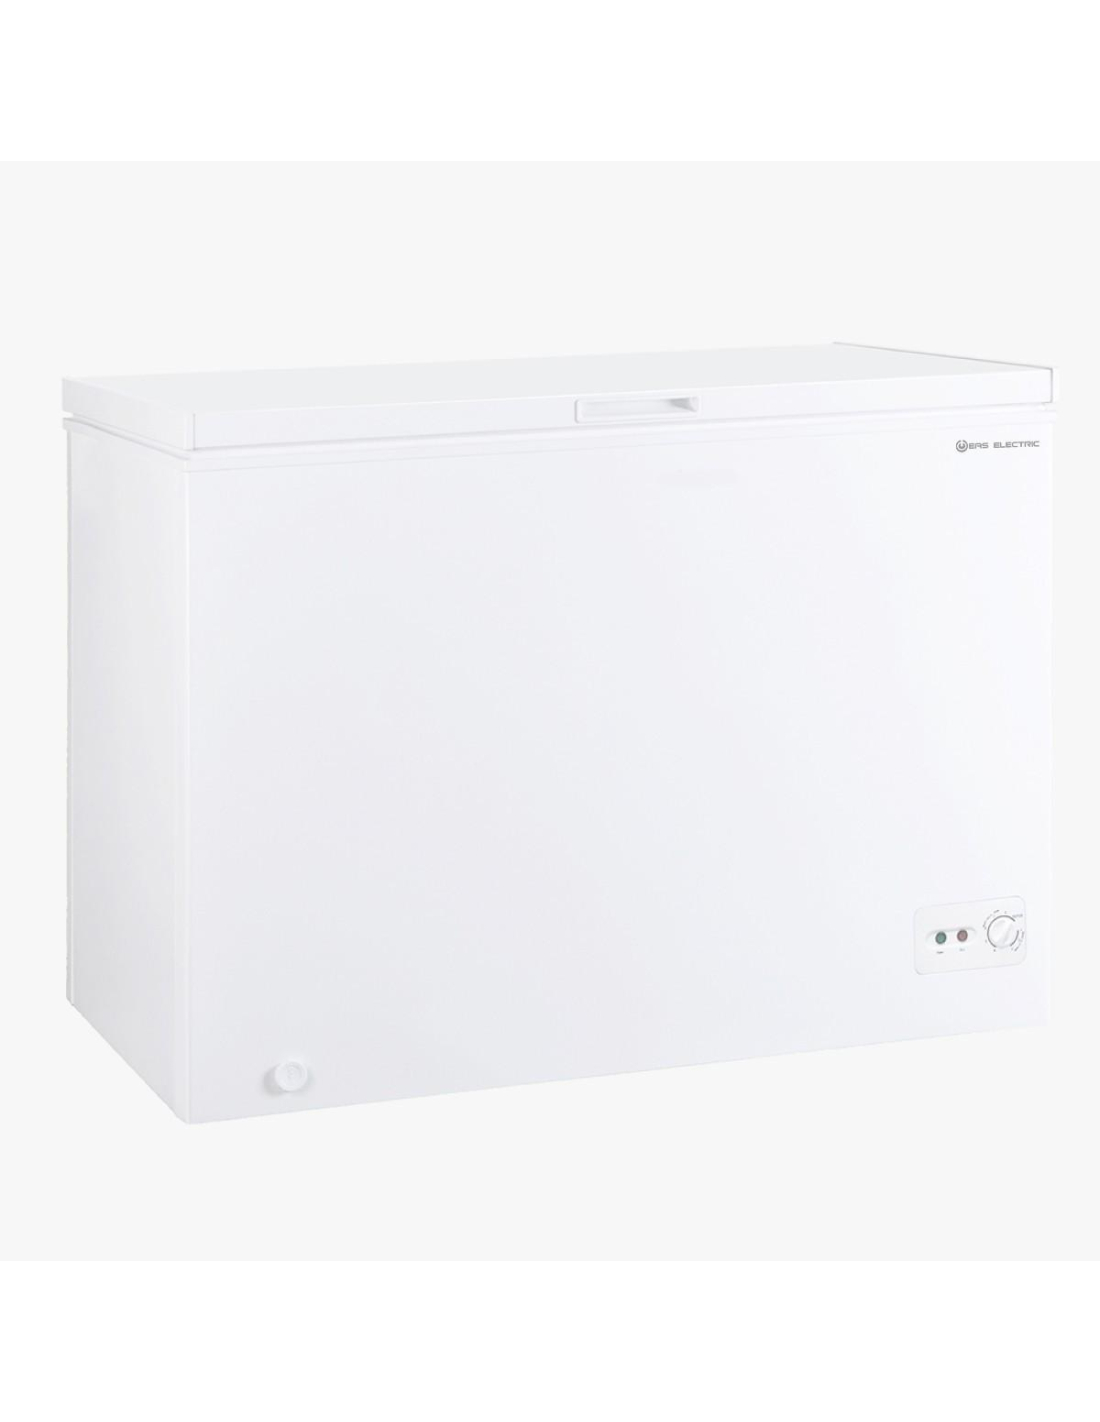 Arcon Congelador EAS ELECTRIC 290 Litros  EMCF302